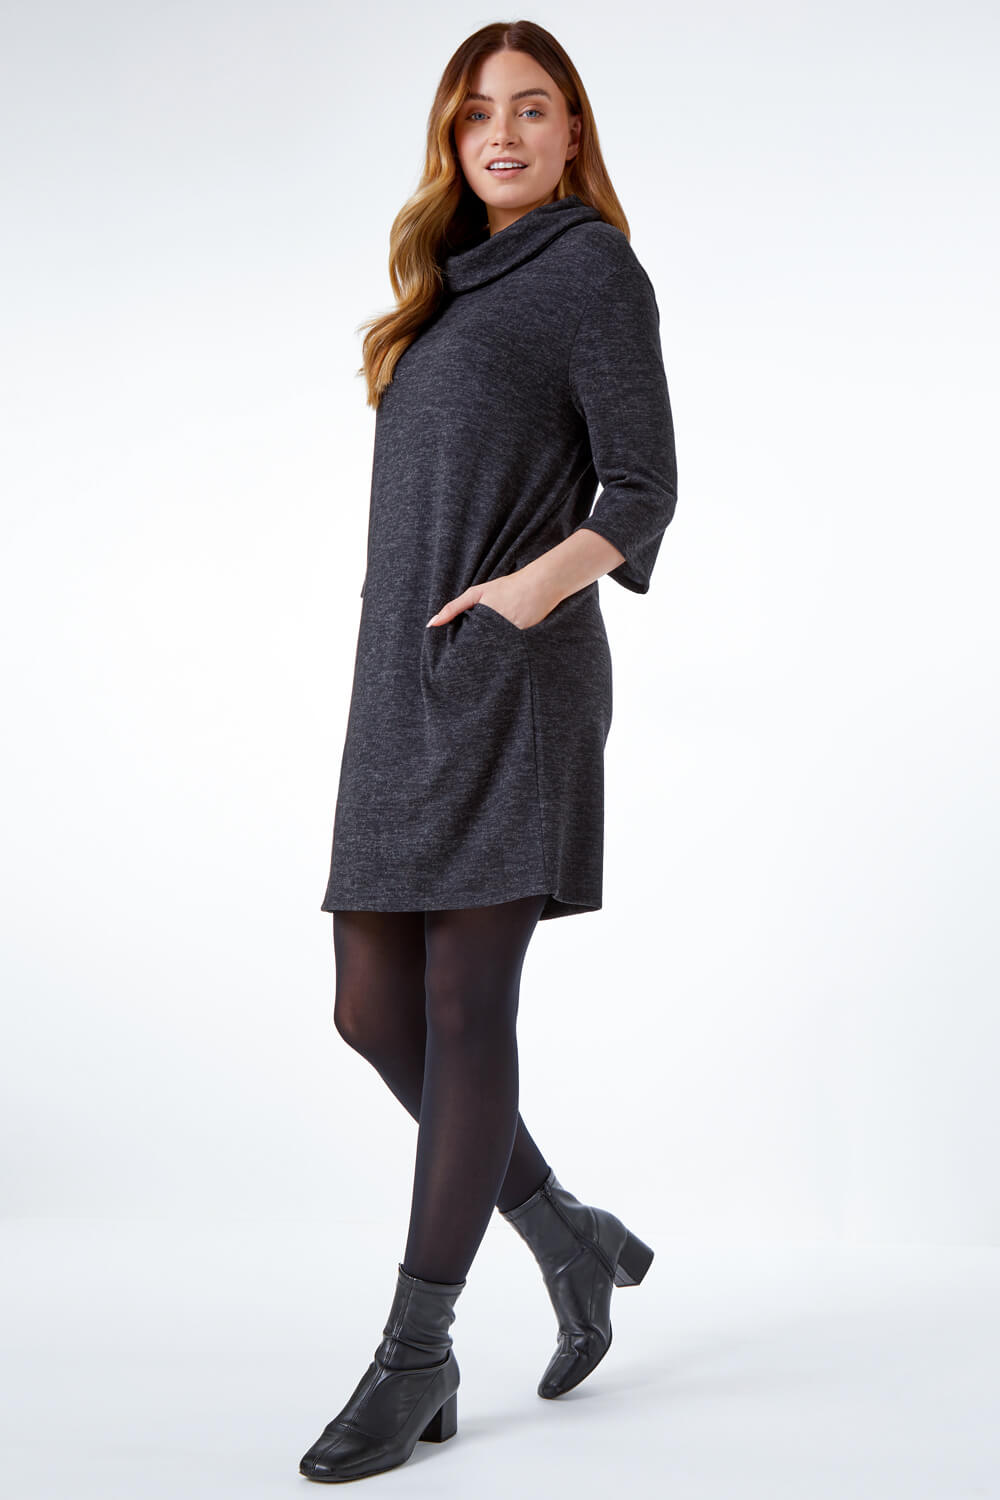 Grey Oversized Cowl Neck Textured Dress, Image 2 of 5